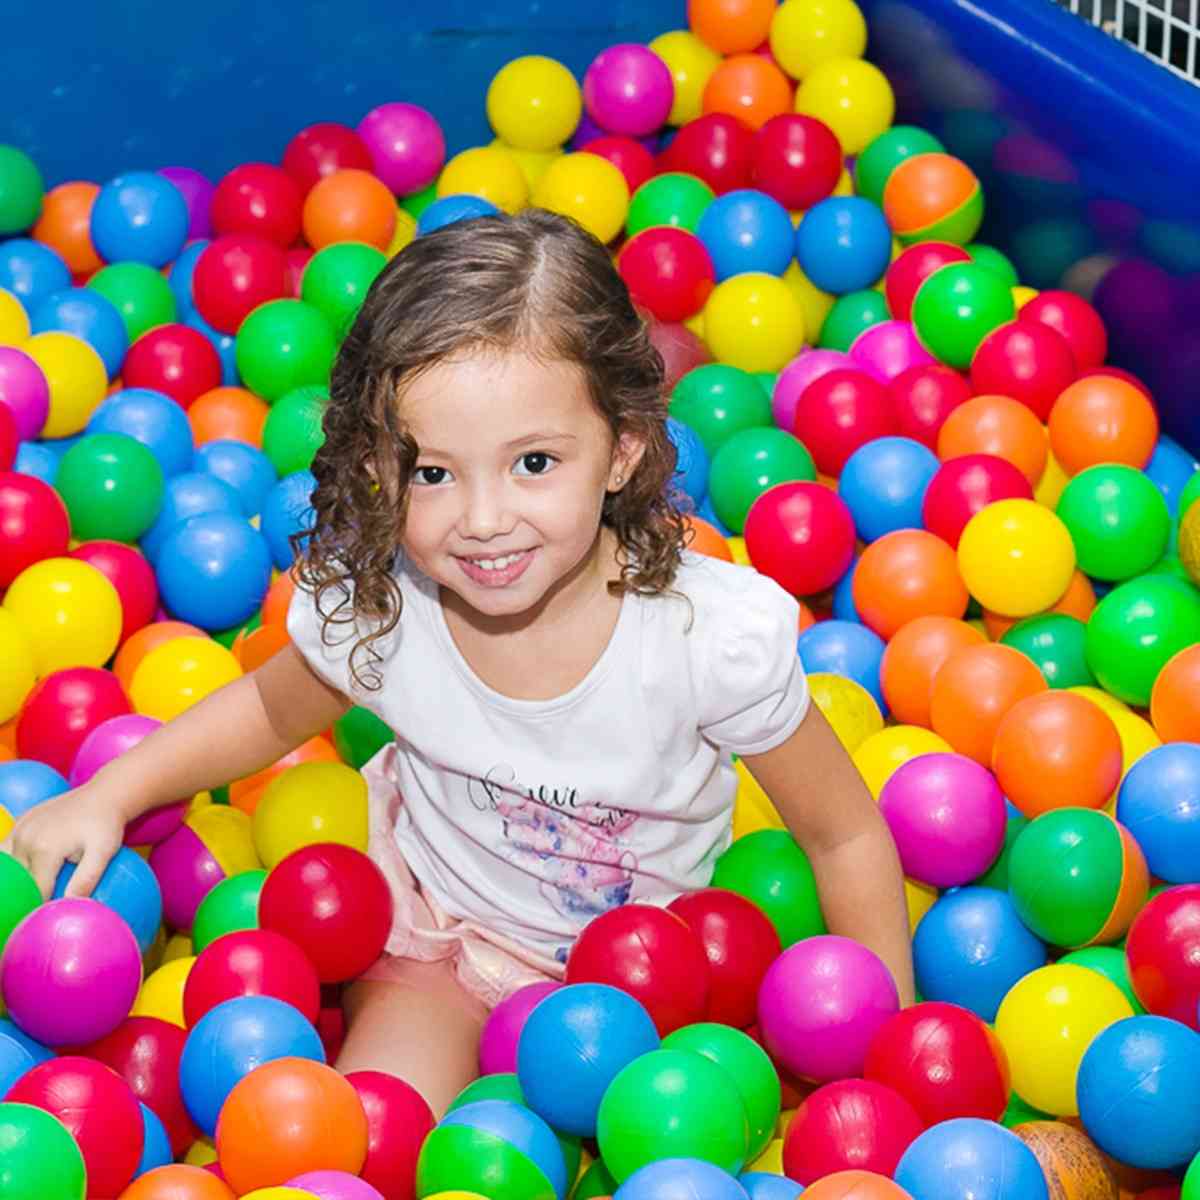 100pcs 4cm colores bolas de plástico para bebés, piscina de agua, bola de olas oceánicas, piscina para niños con aro de baloncesto, casa de juegos al aire libre, carpas, juguete (4cm) -